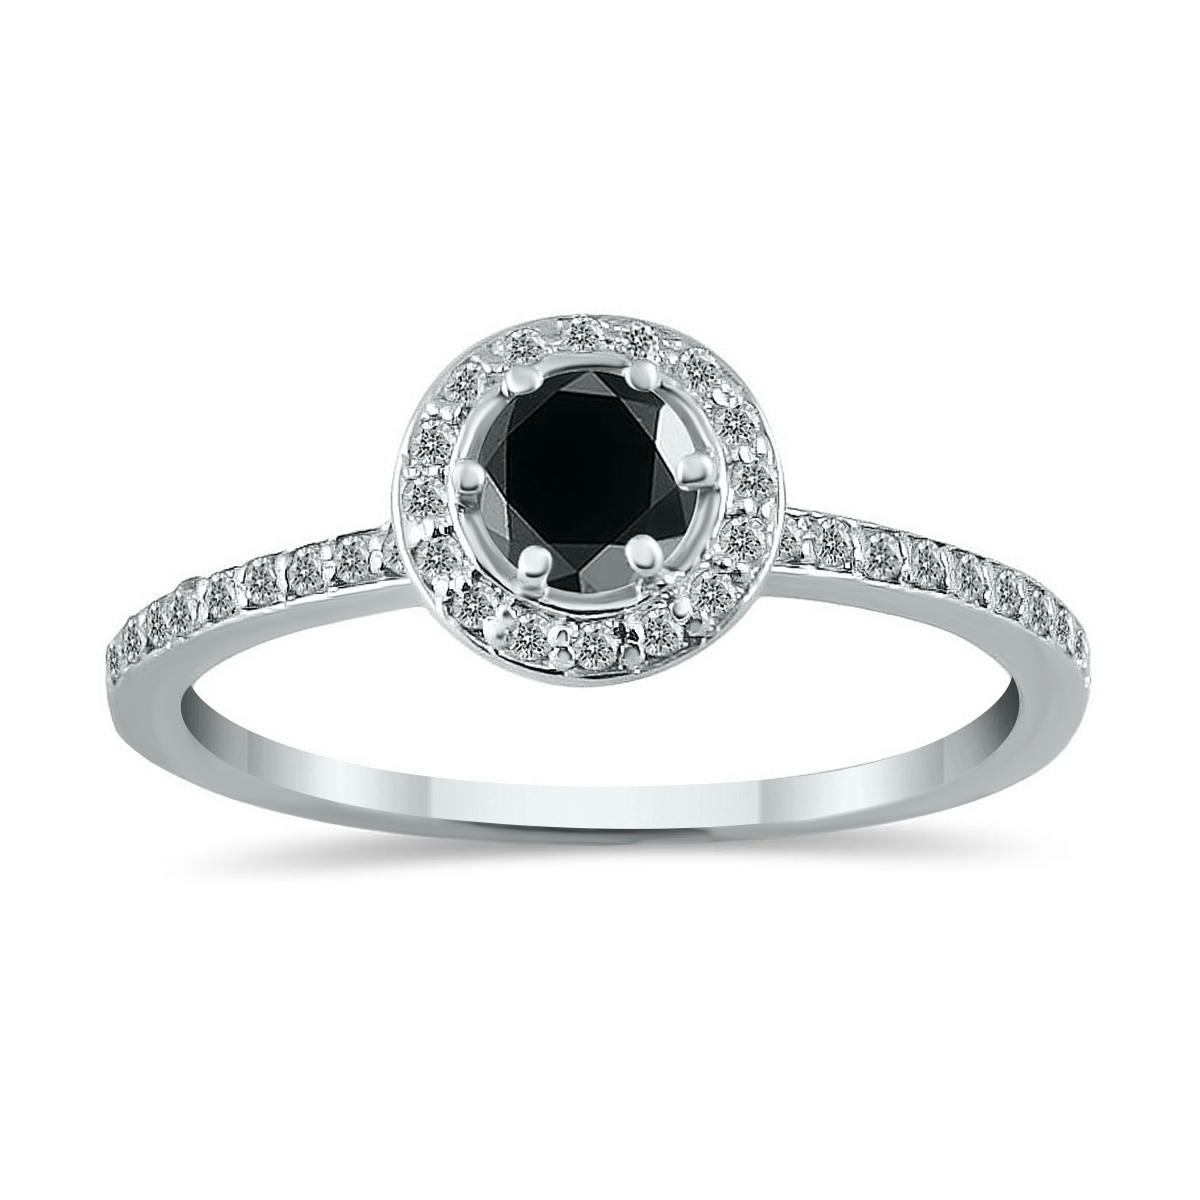 1/2 Carat TW Black and White Diamond Ring in 14K White Gold